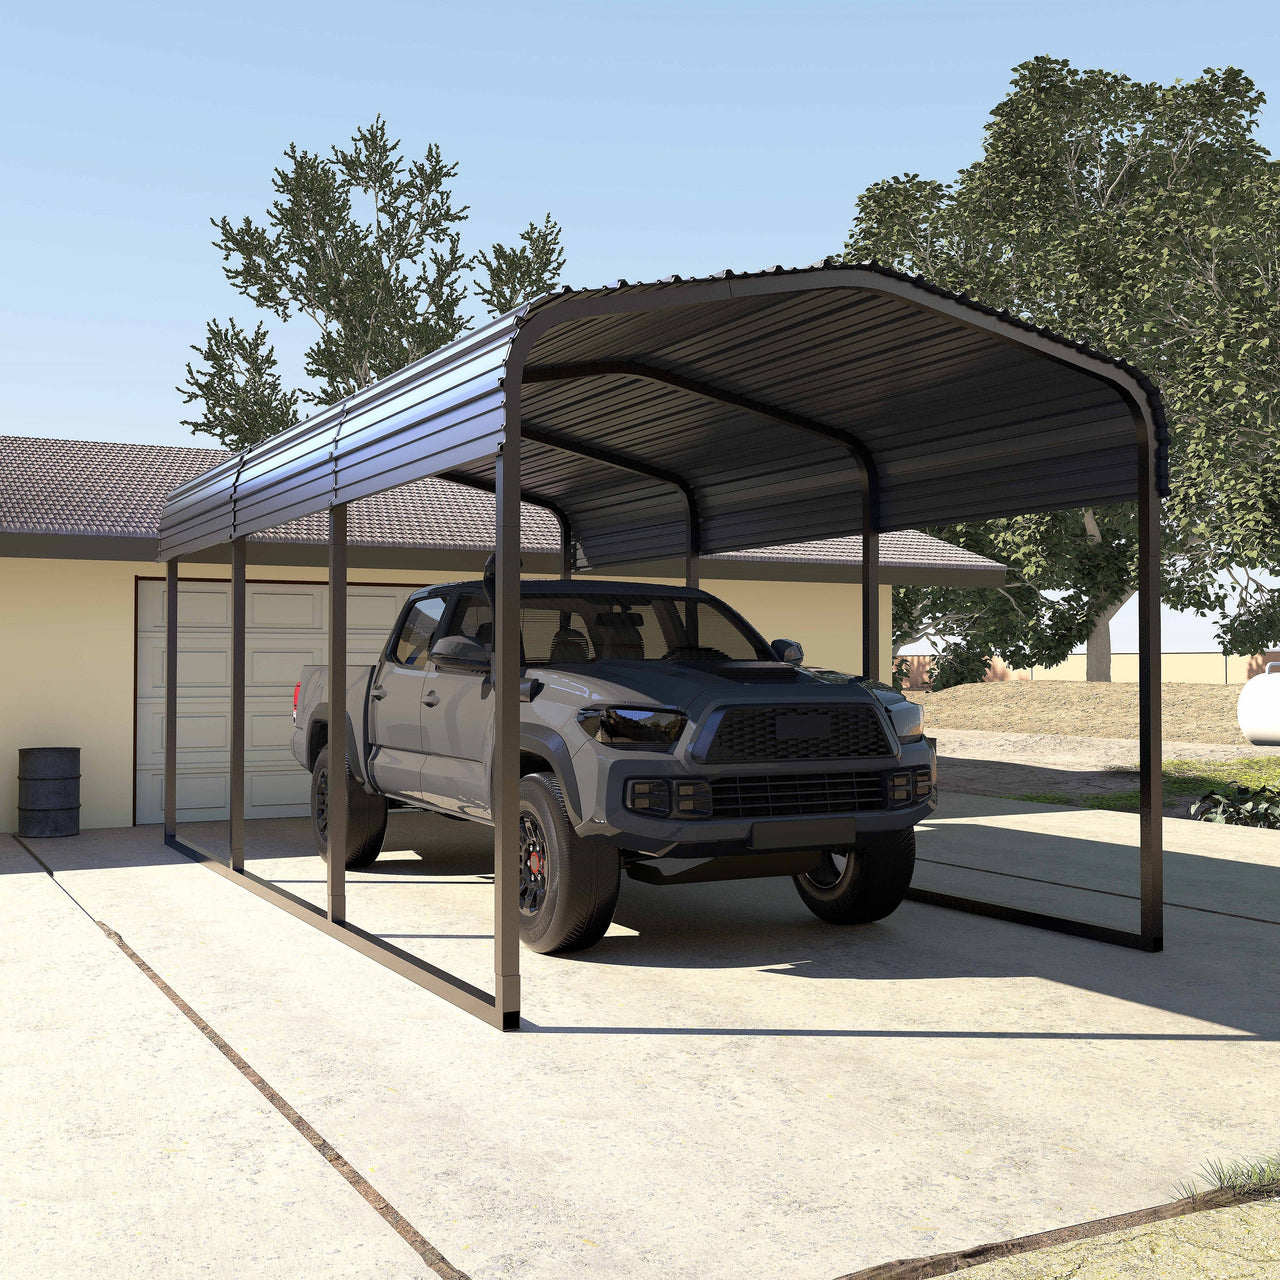 VEIKOUS Outdoor Carport Metal Canopy 10' X 15'